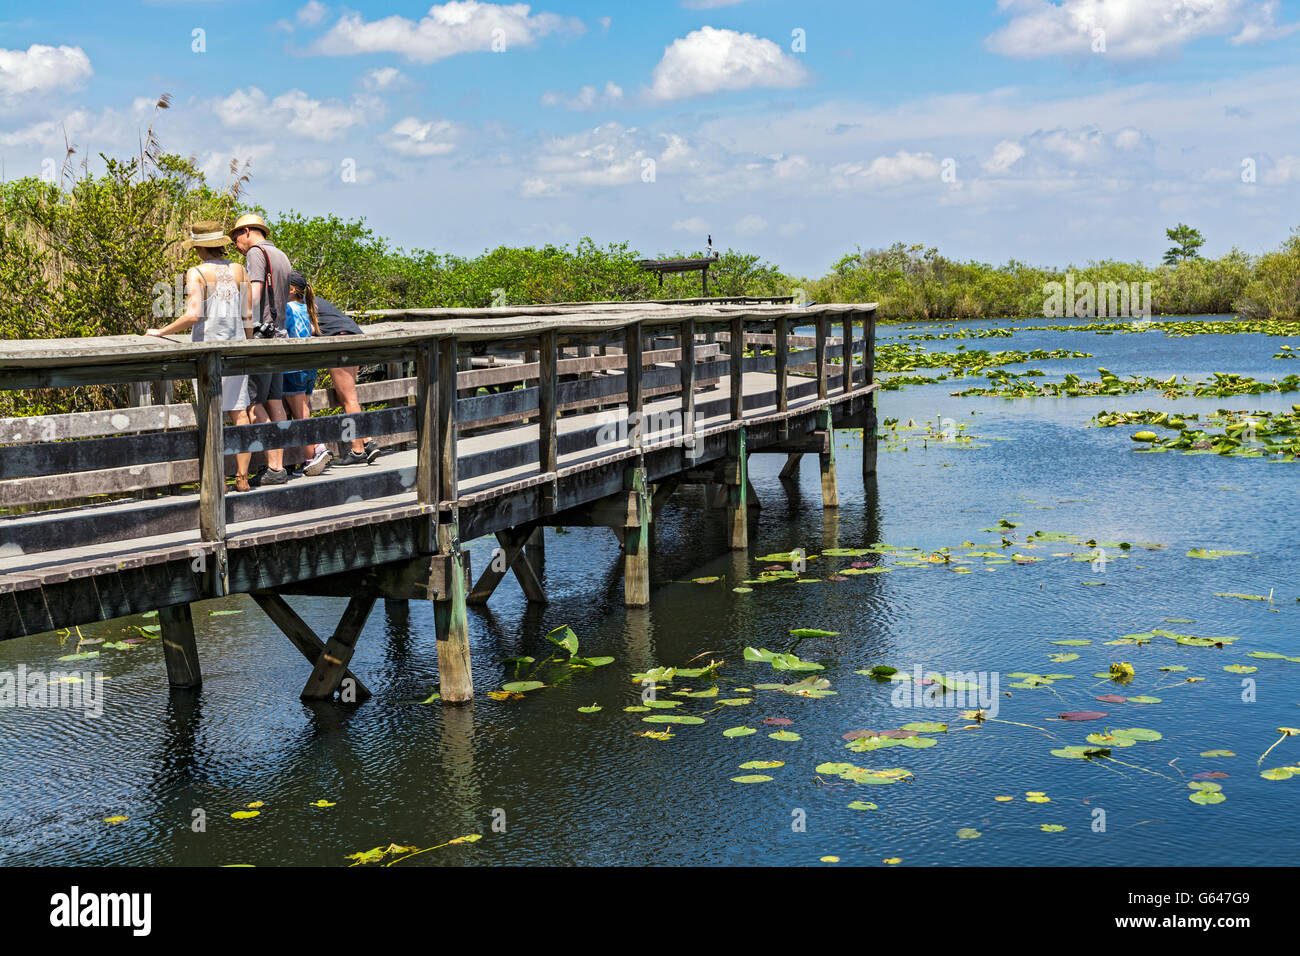 Florida, Everglades National Park, Anhinga Trail, family on boardwalk Stock Photo